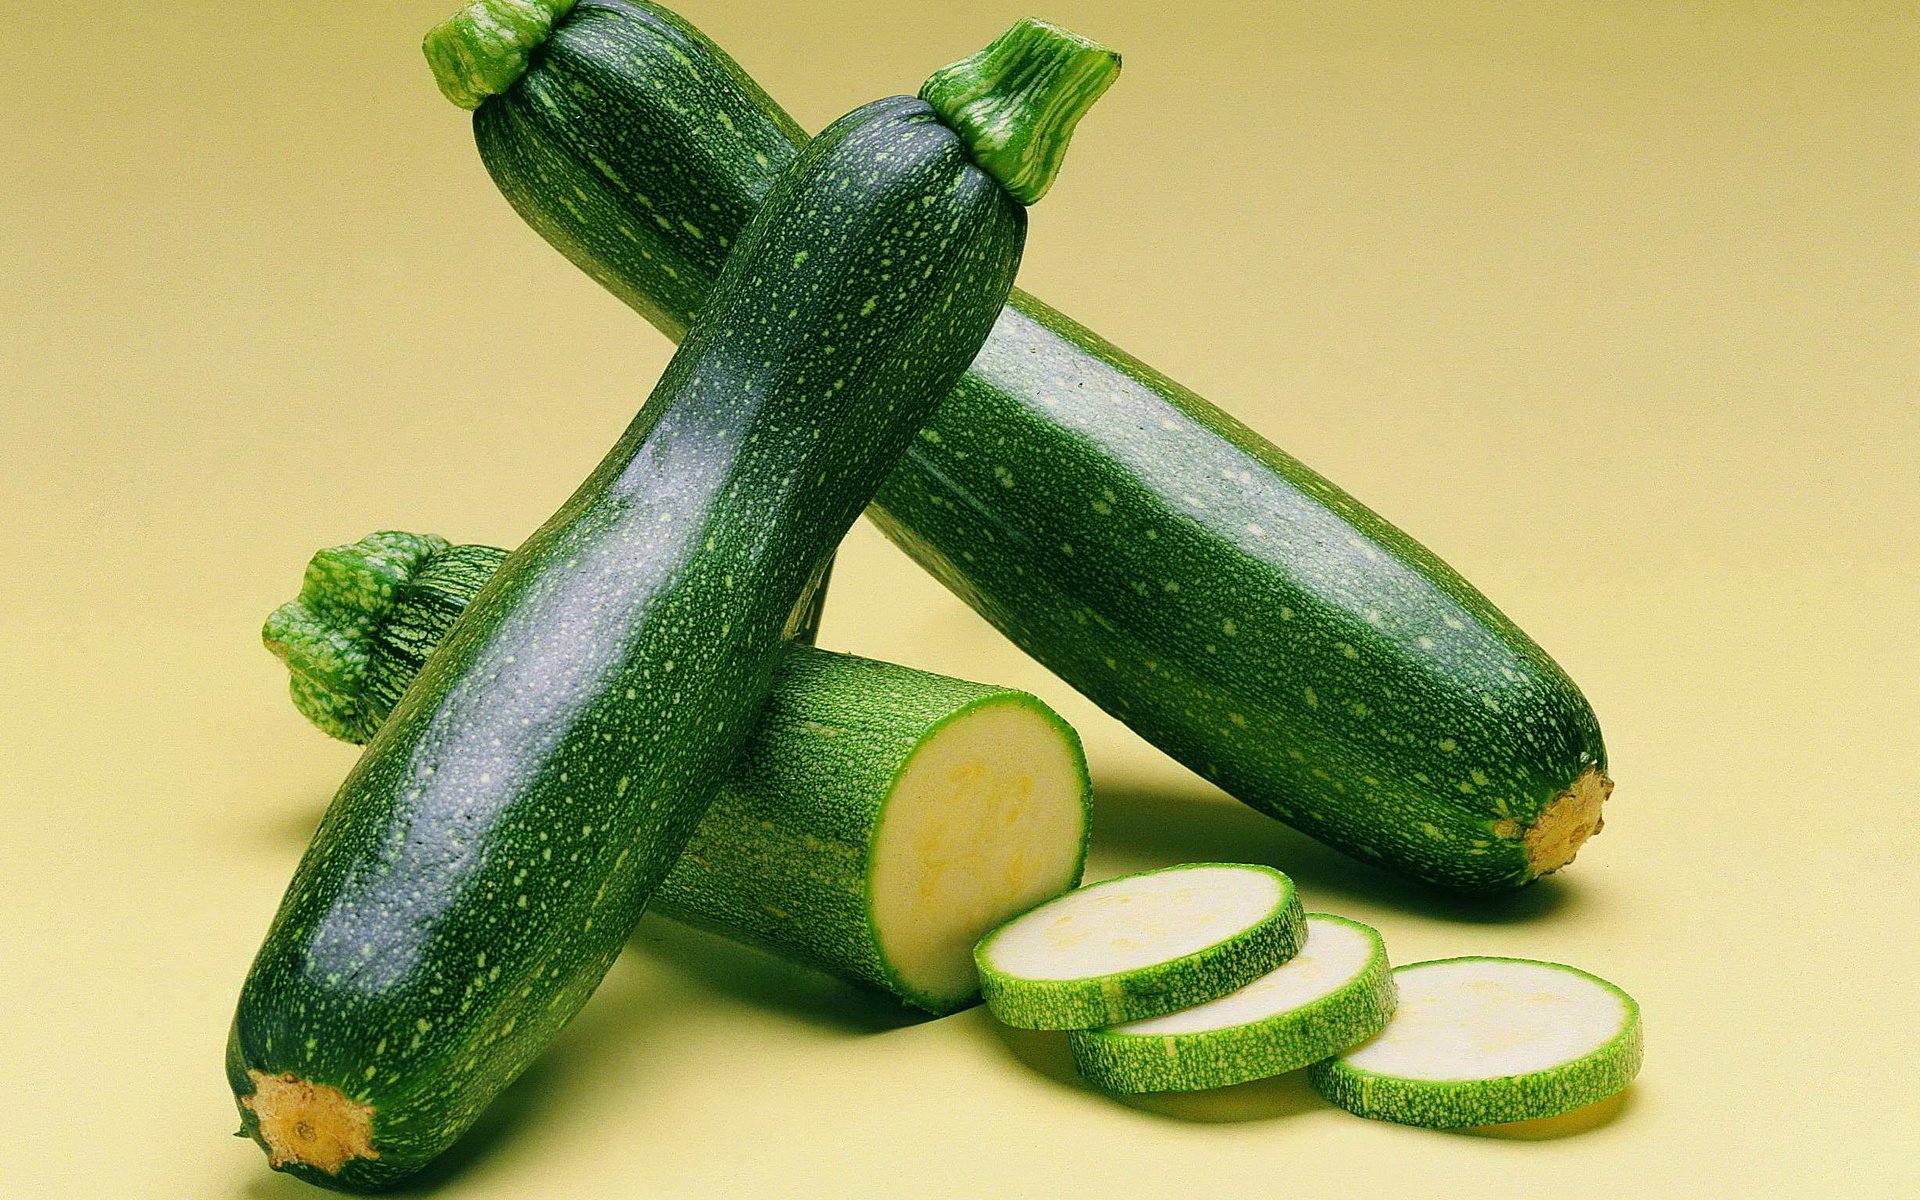 zucchini - Zucchini pepo